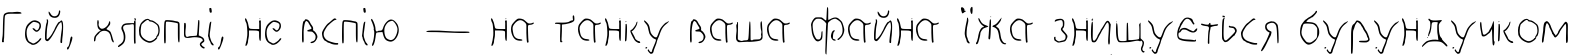 Пример написания шрифтом Disco-Grudge Lite (Windows) Medium текста на украинском